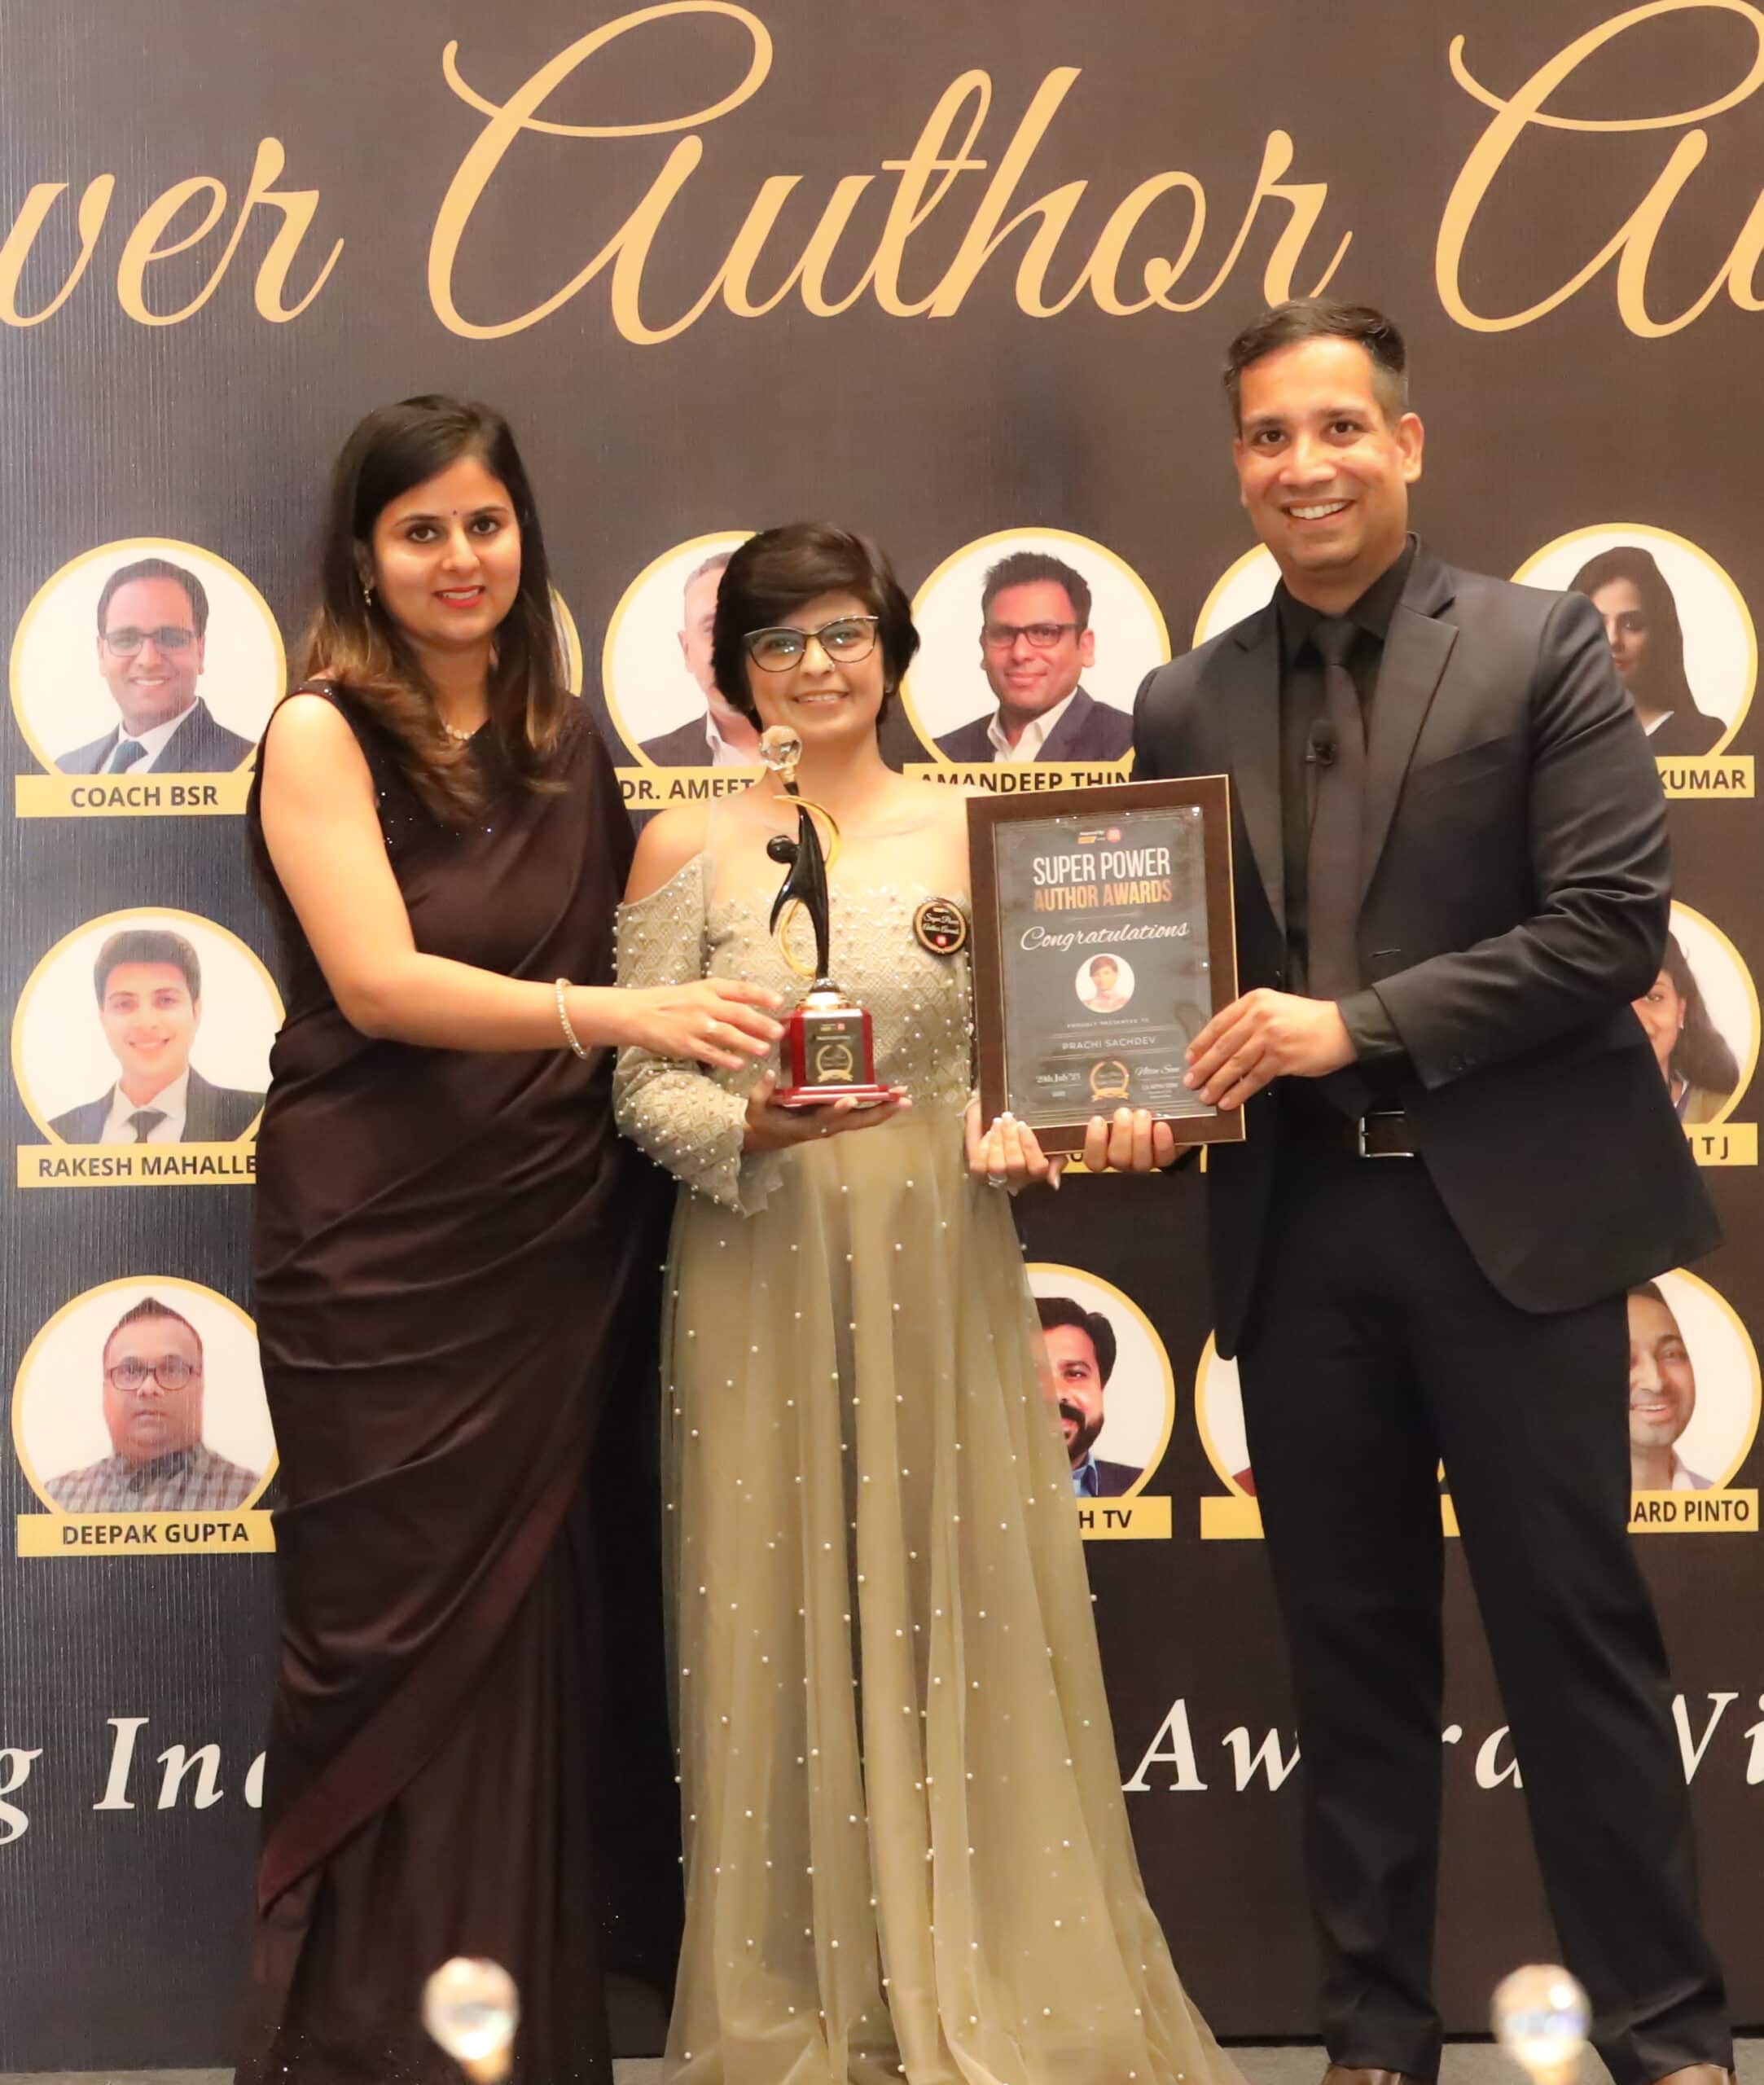 Super Power Author Award - Prachi Sachdev